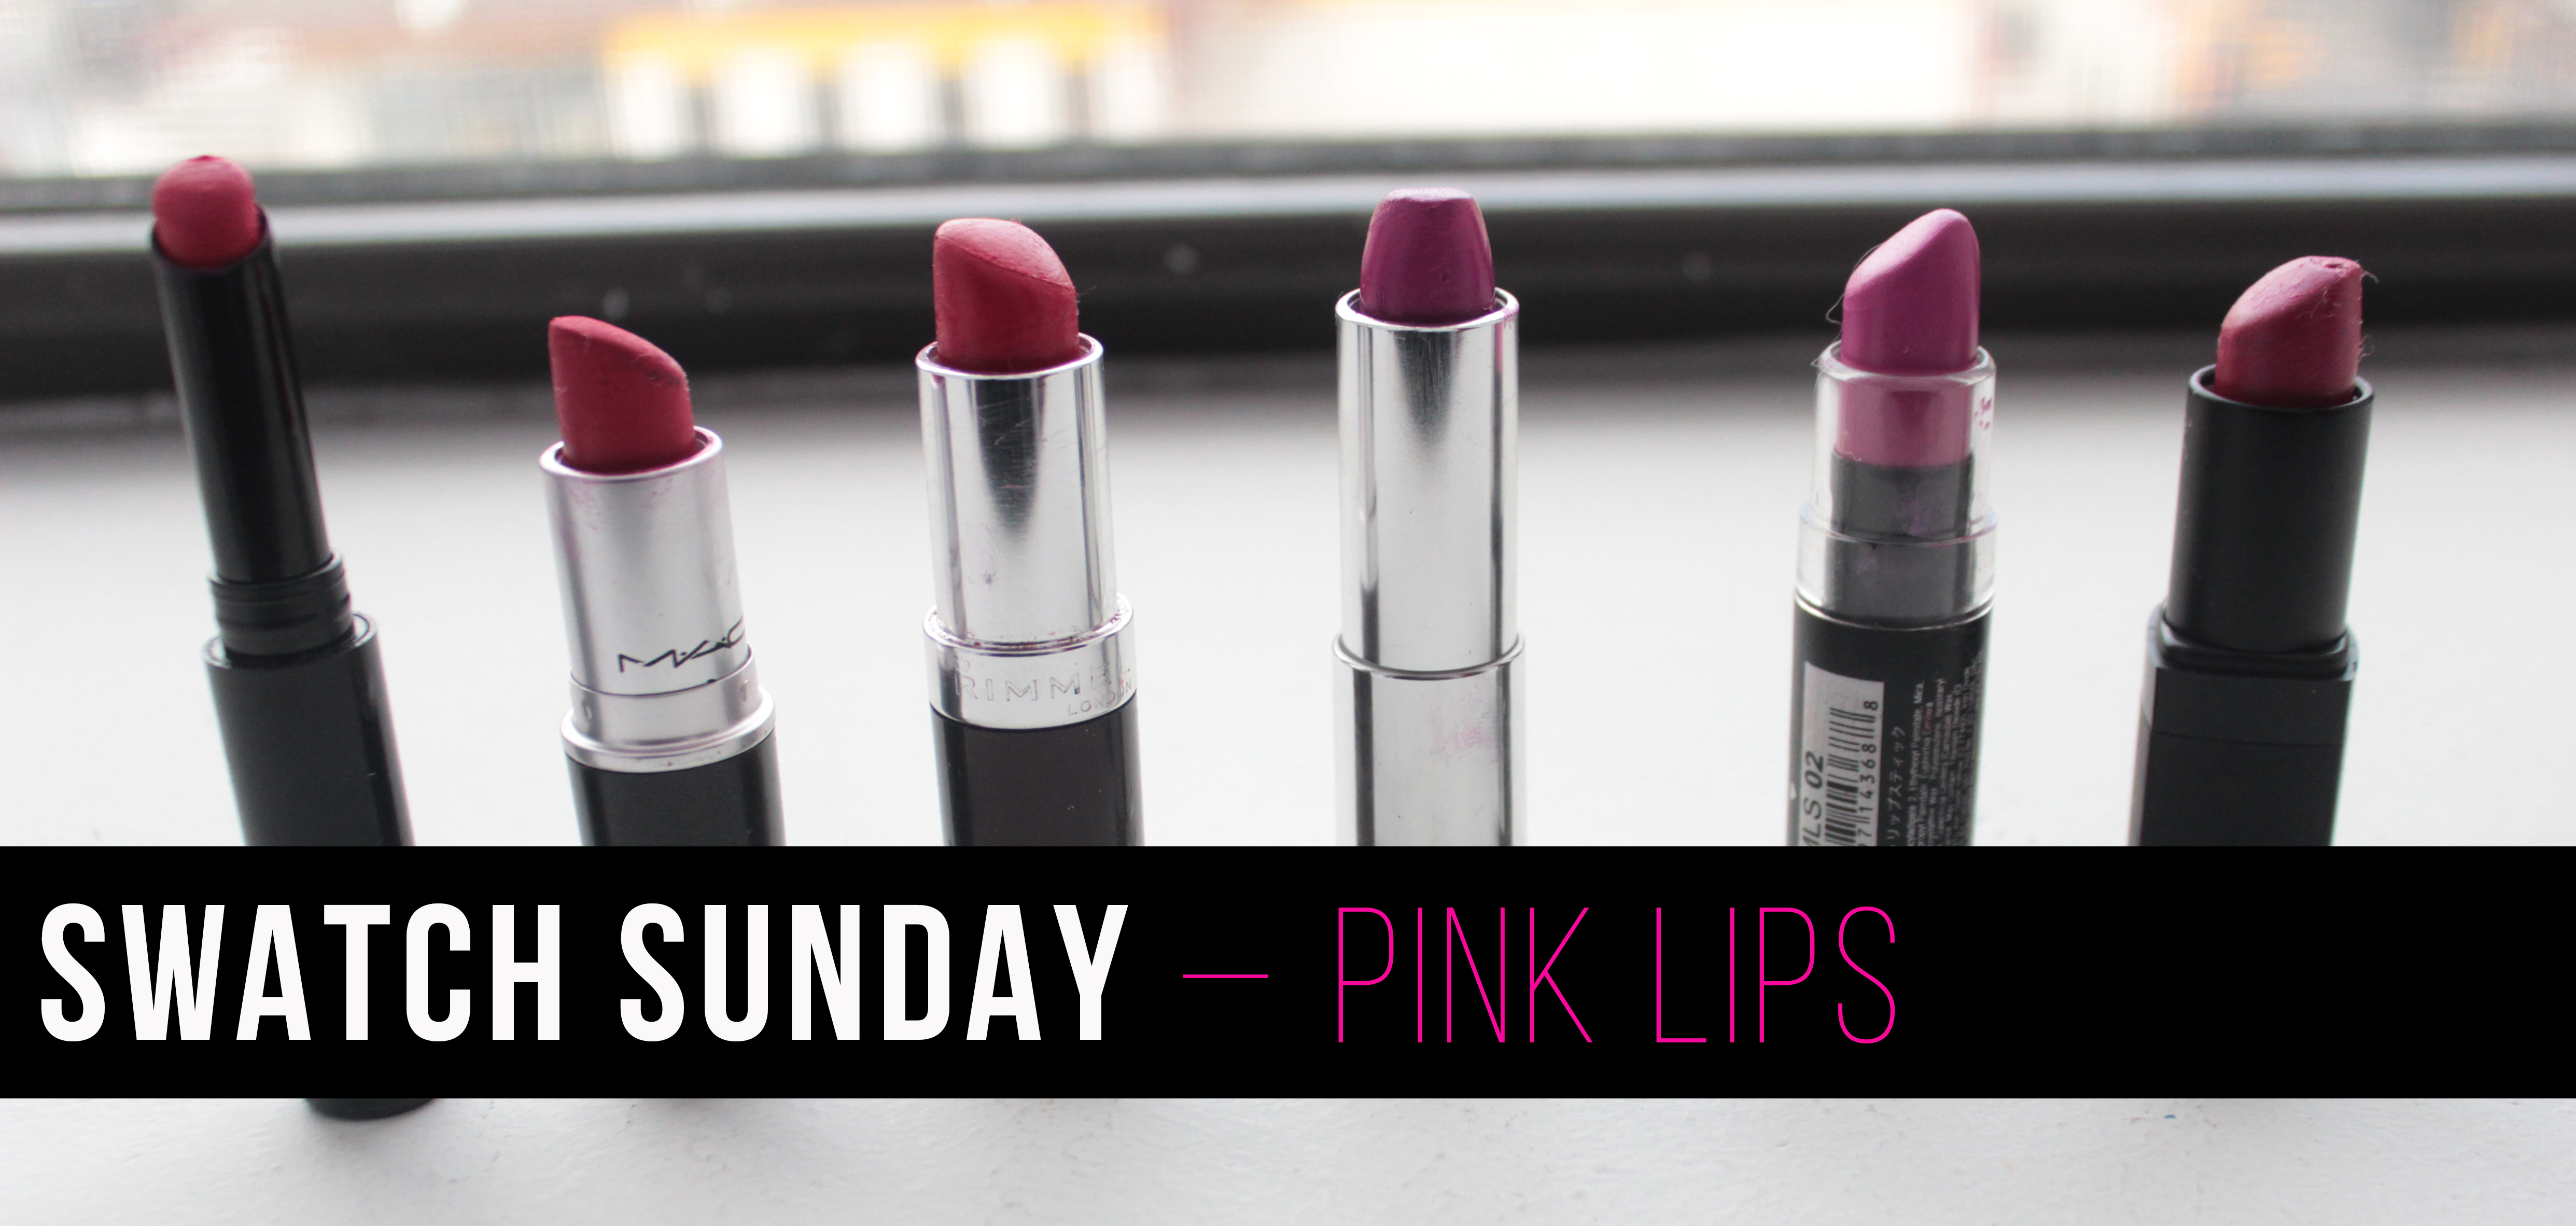 Swatch Sunday Pink Lips